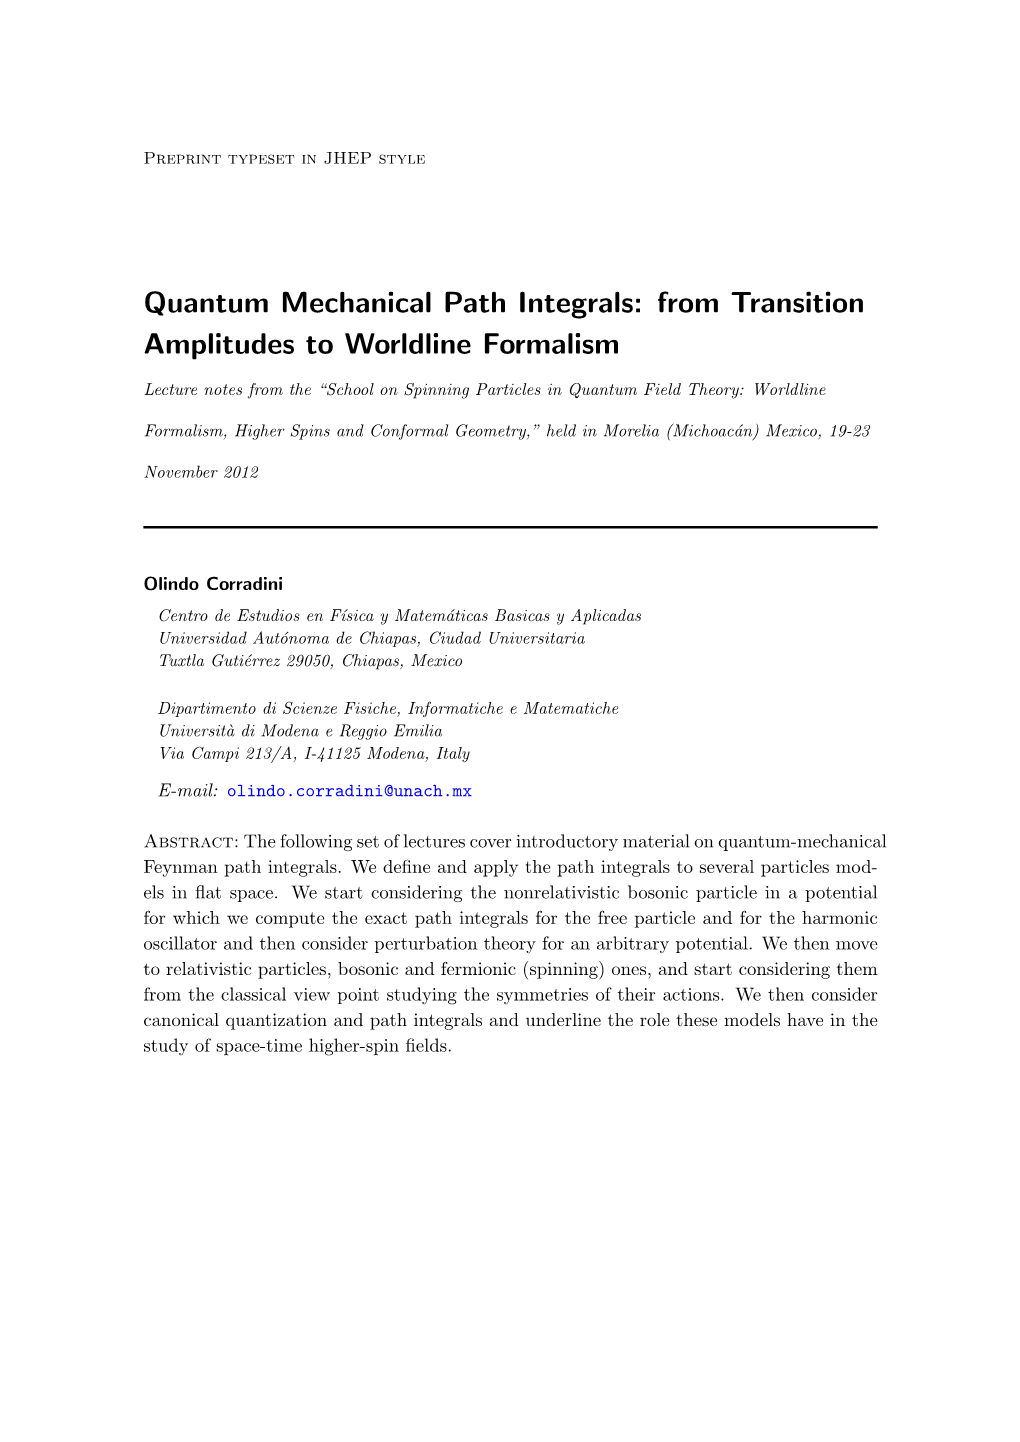 Quantum Mechanical Path Integrals: from Transition Amplitudes to Worldline Formalism